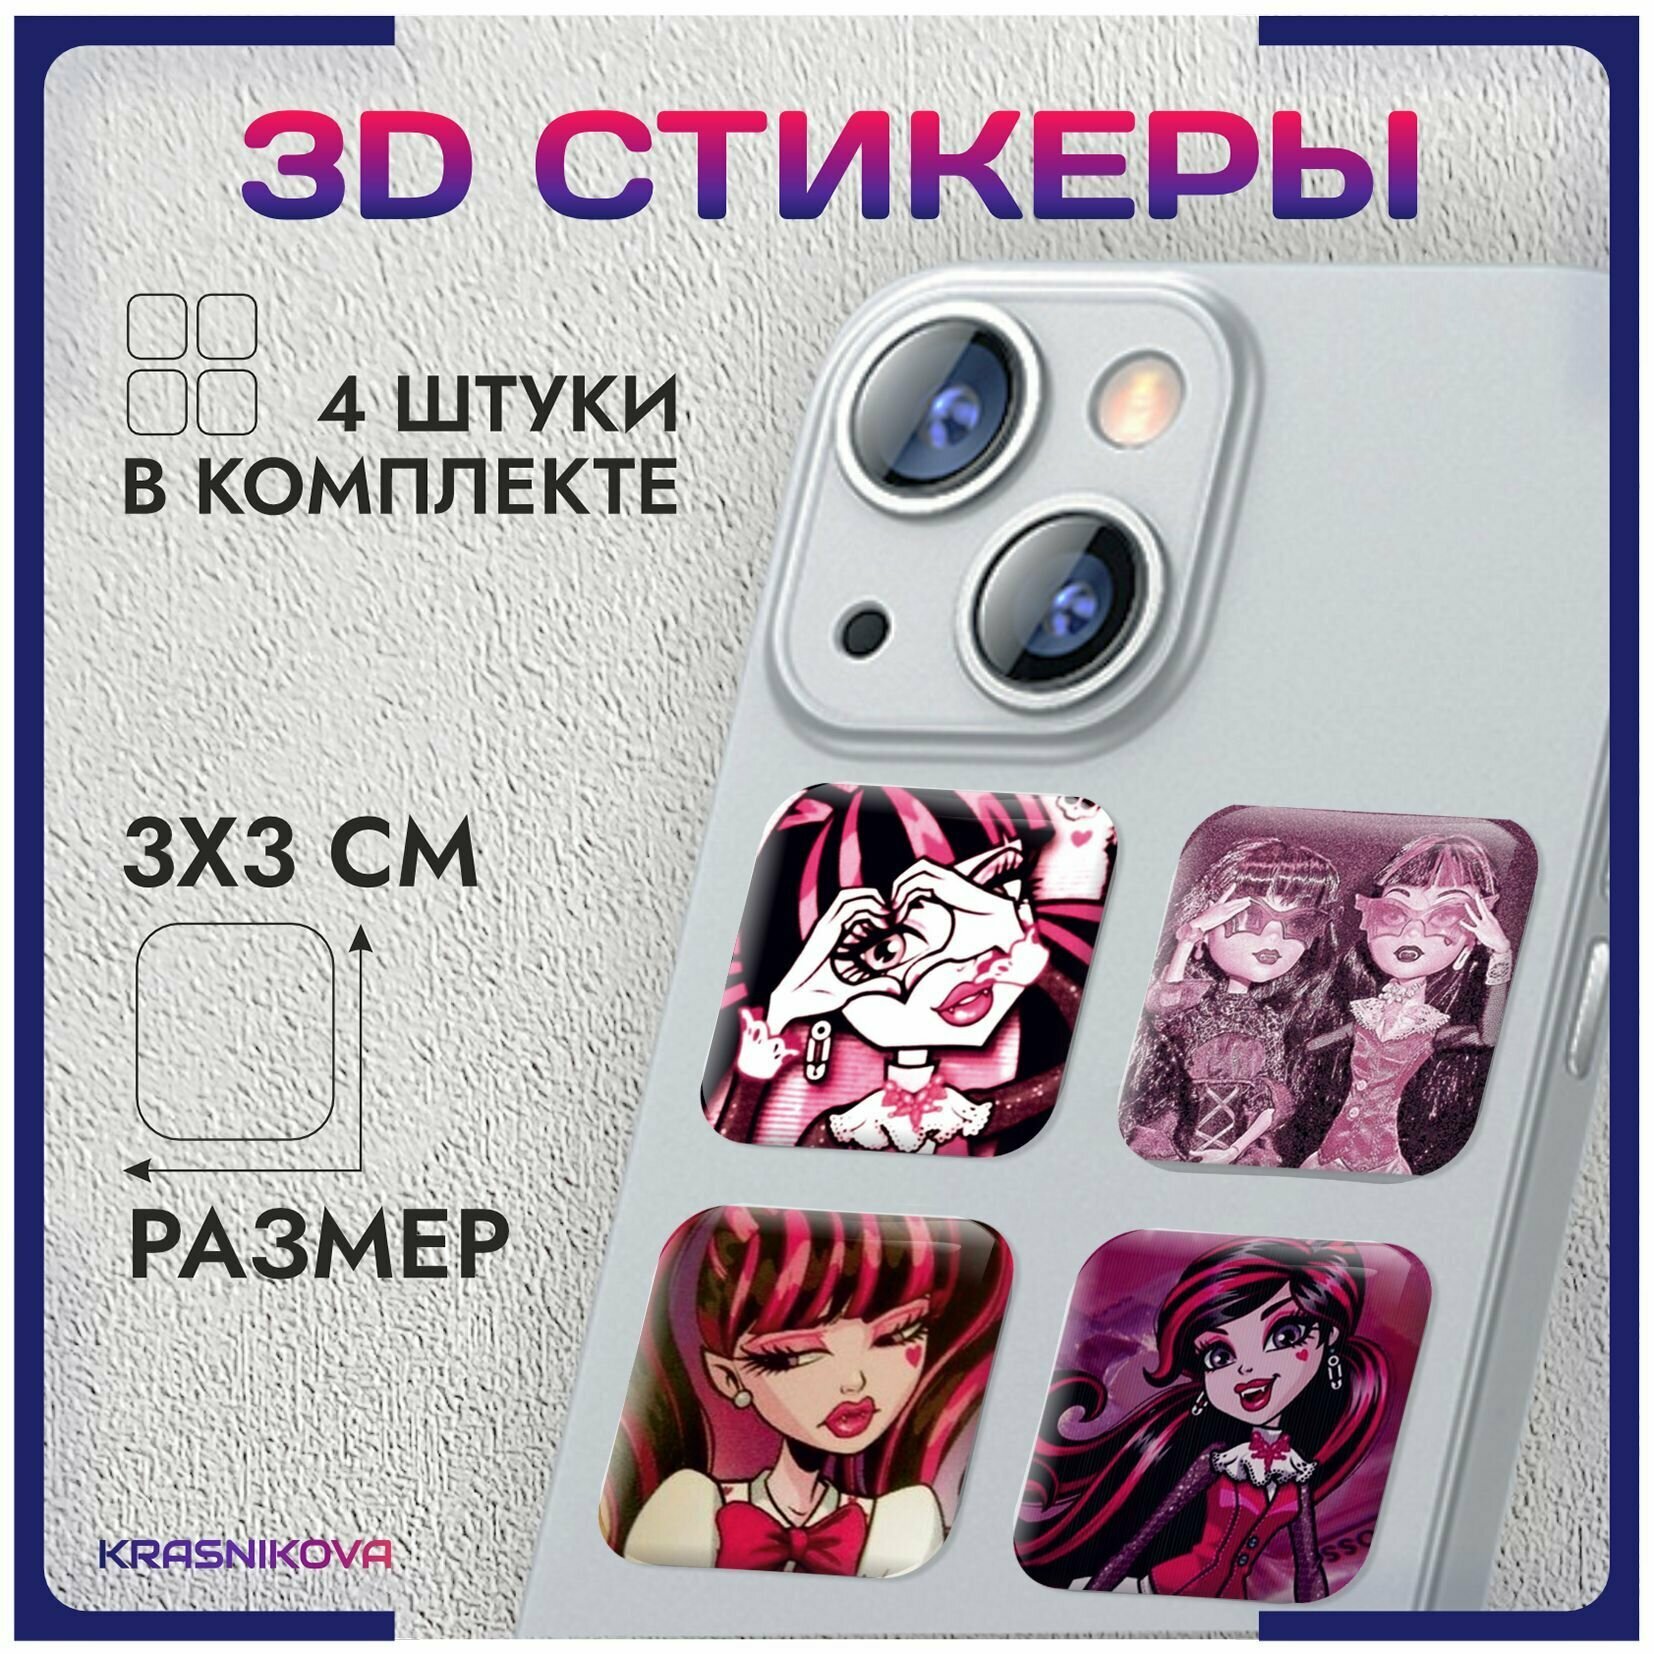 3D стикеры на телефон объемные наклейки монстр хай дракулаура monster high